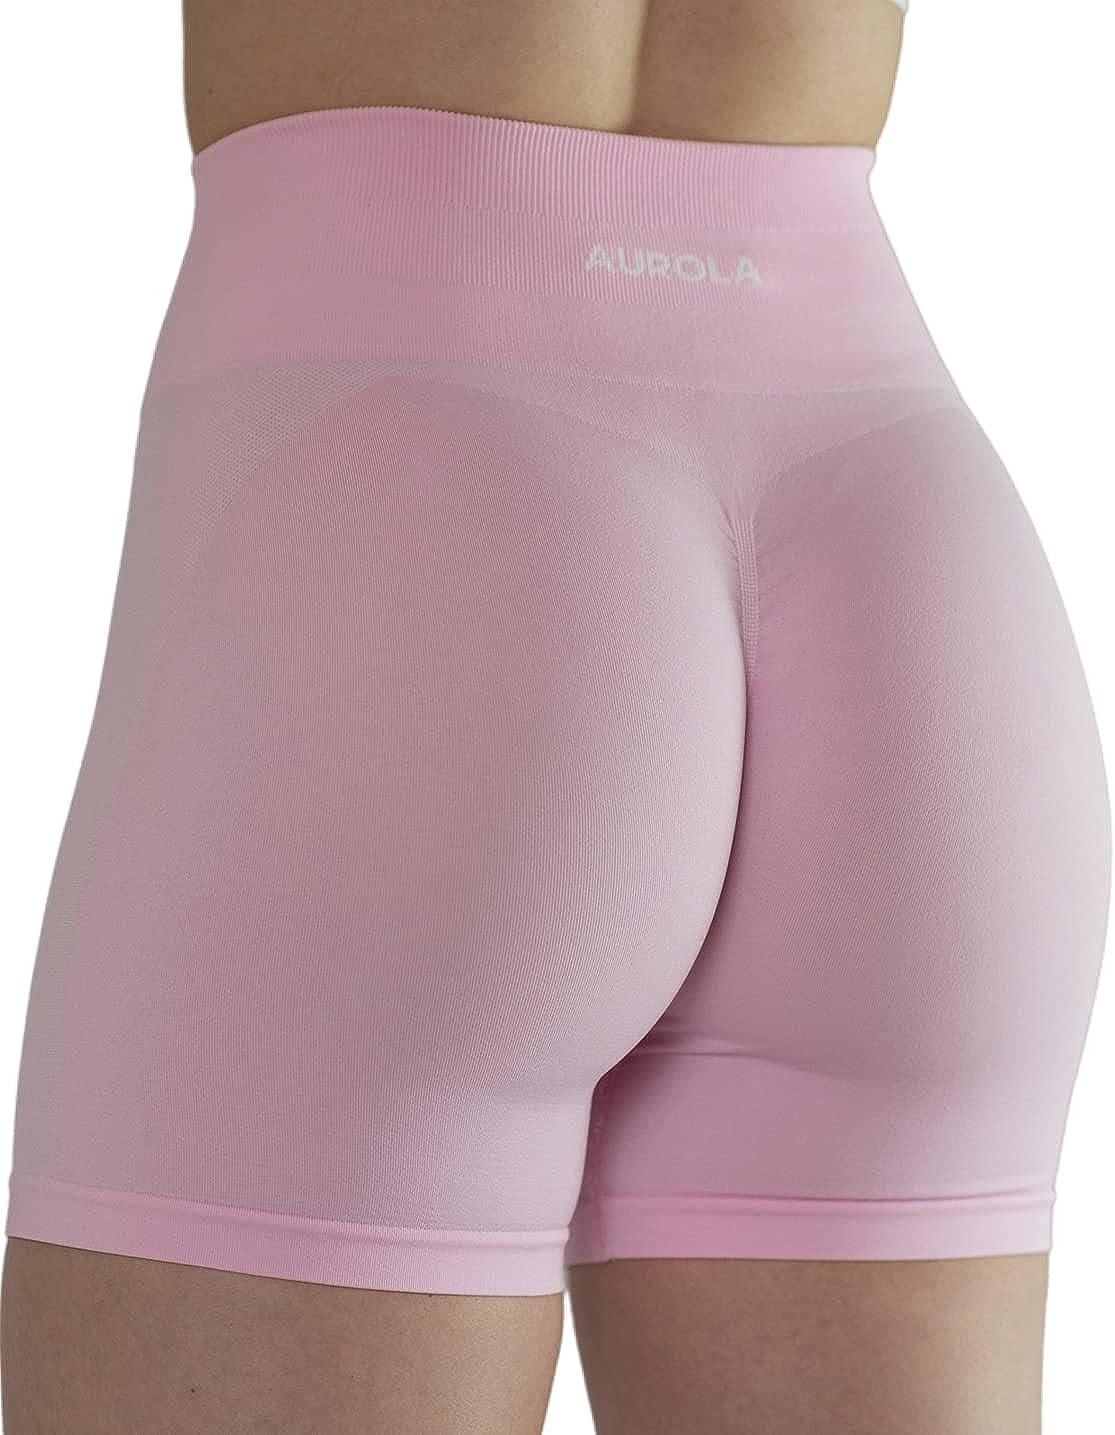 Buy AUROLA Intensify Workout Shorts for Women Seamless Scrunch